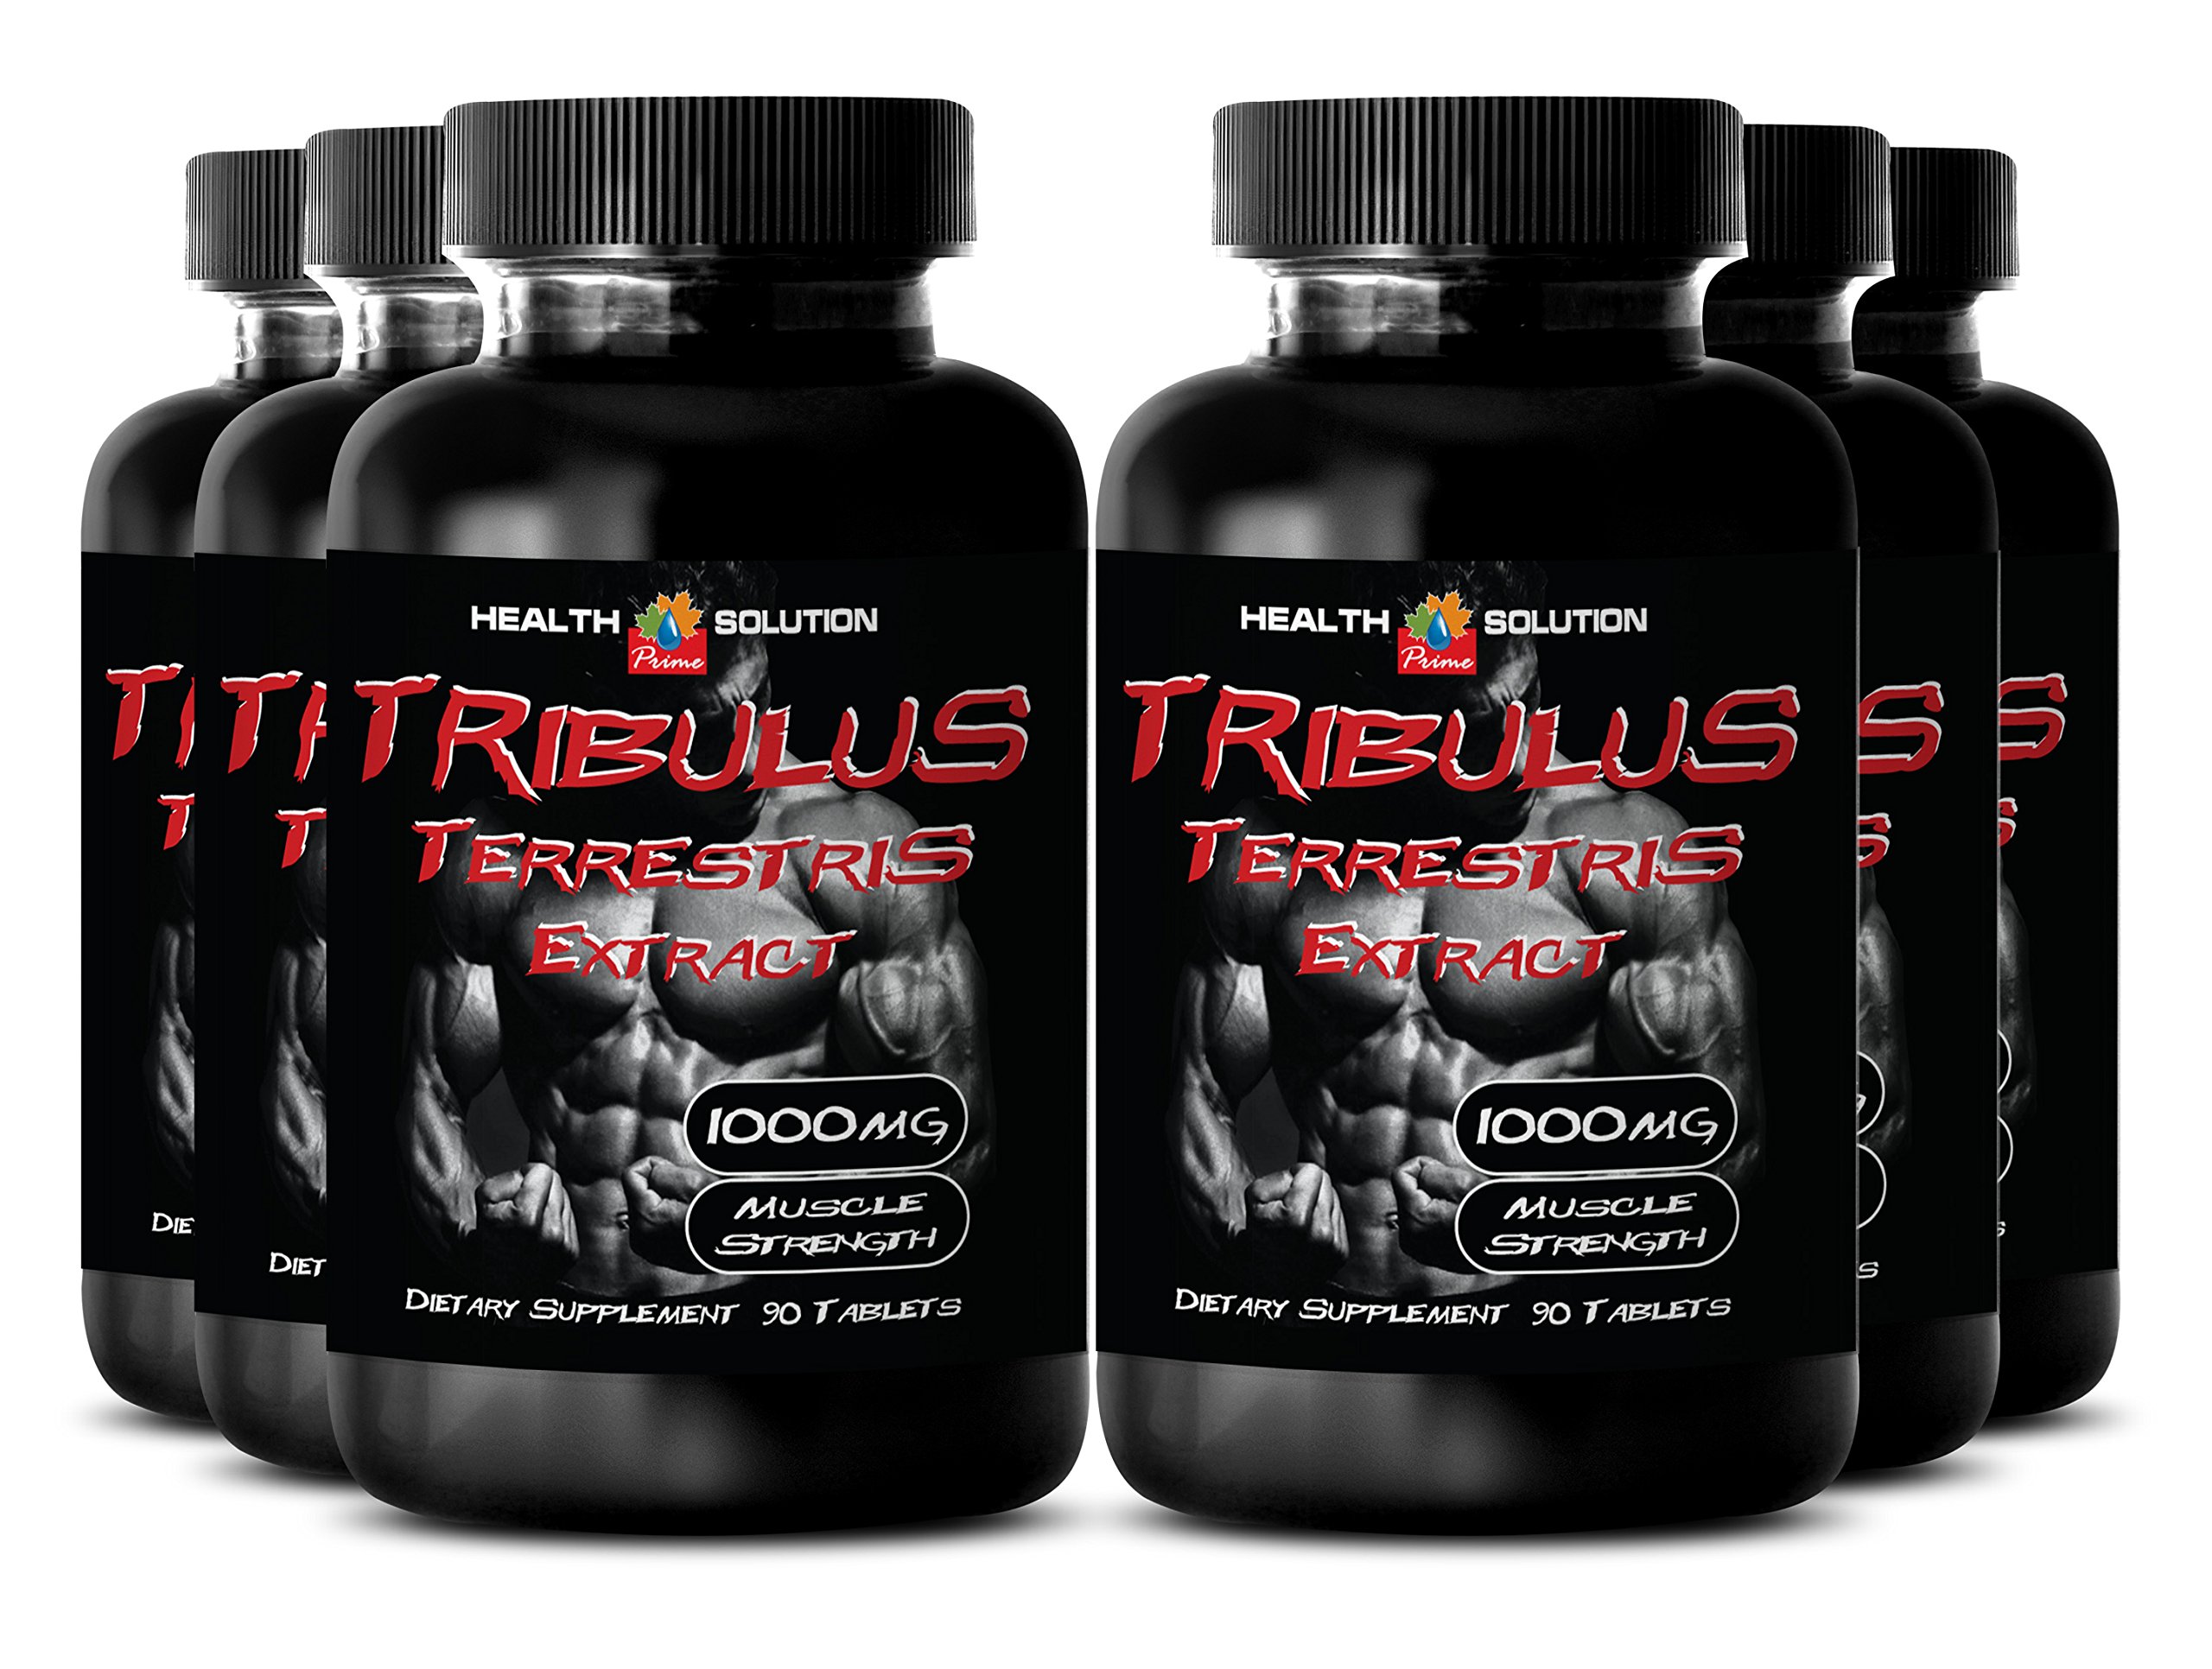 Tribulus Bulgarian - Tribulus Terrestris Extract 1000mg Muscle Strength - Sexual Desire Pills (6 Bottles 540 Tablets)